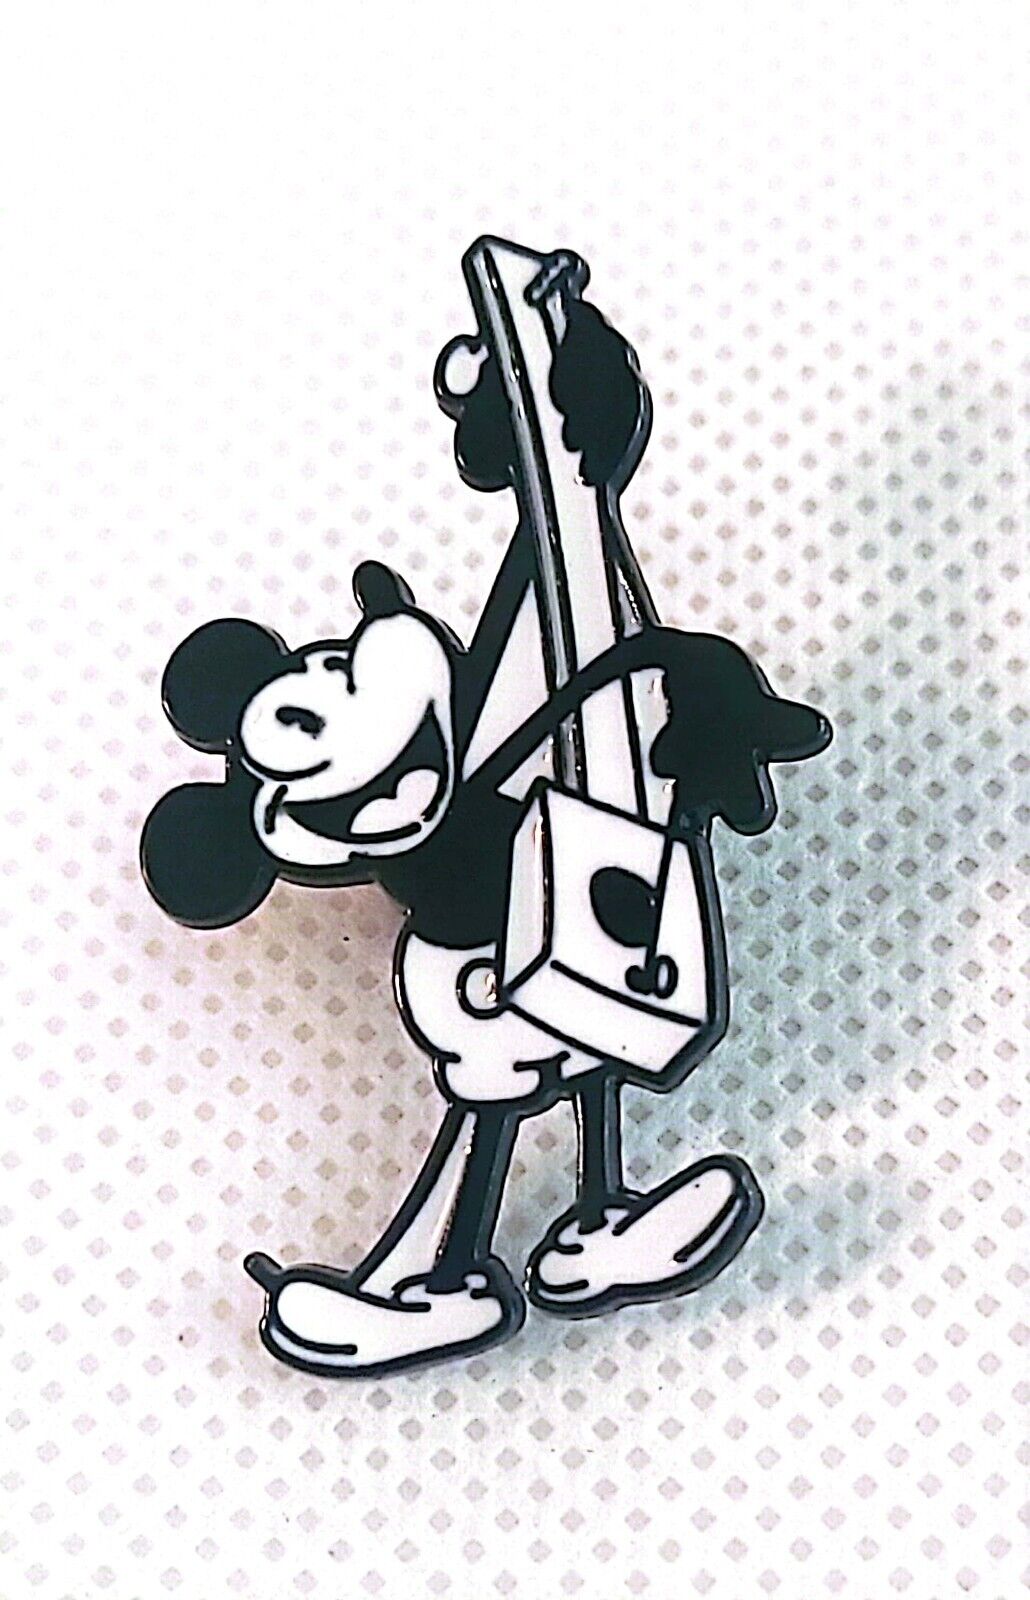 Mickey Mouse Playing the Banjo Guitar Disney Enamel Pin